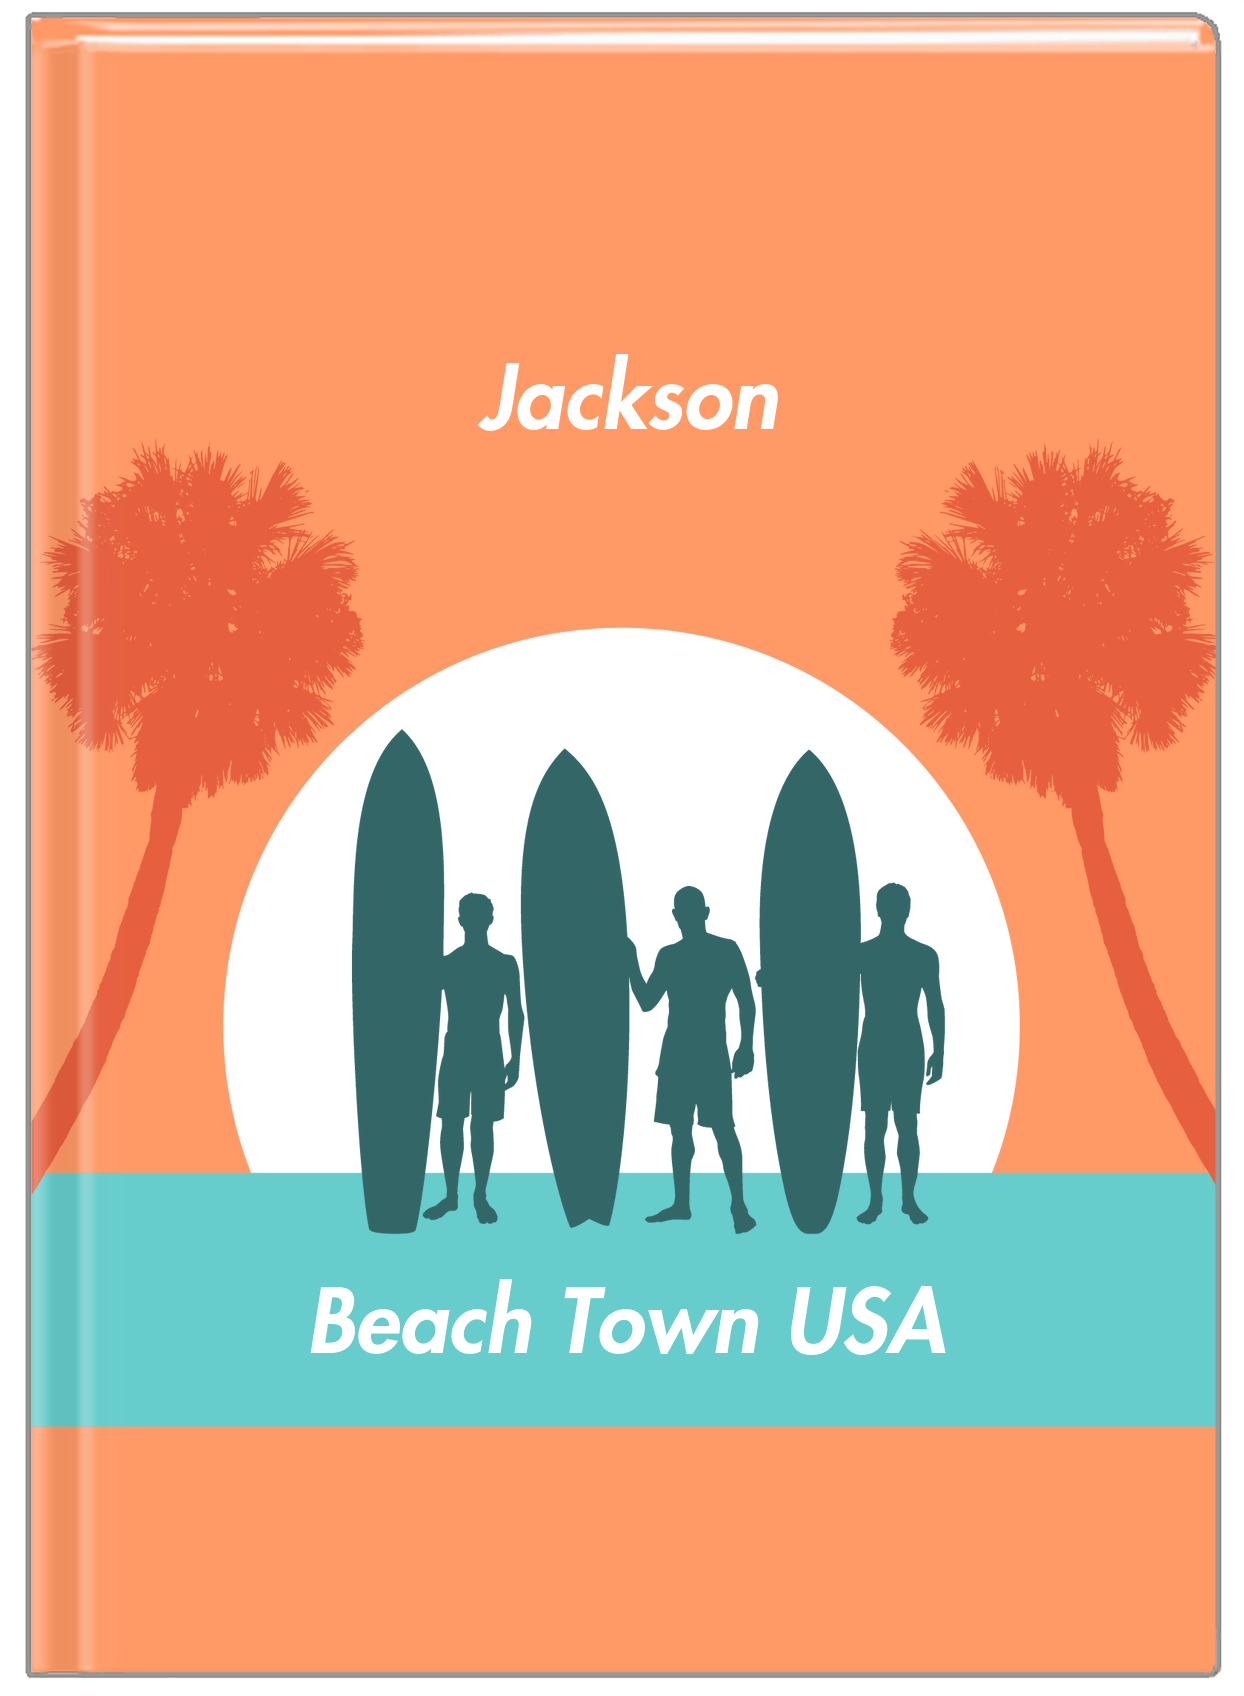 Personalized Beach Journal XVII - Beach Town - Orange Background - Front View